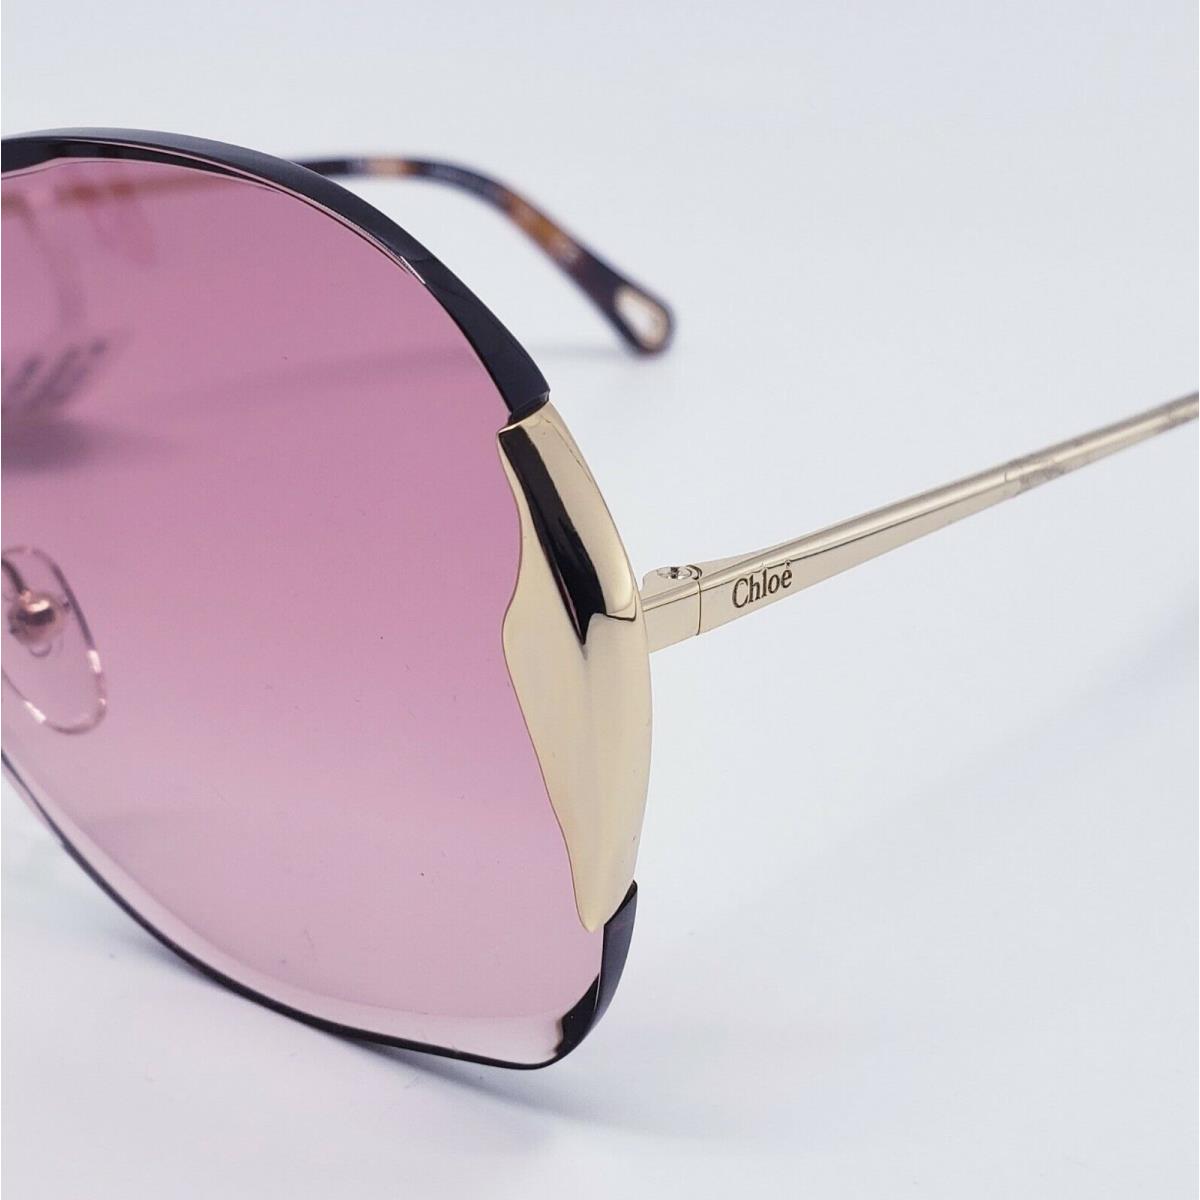 Chloé sunglasses  - Gold Frame, Pink Lens 2